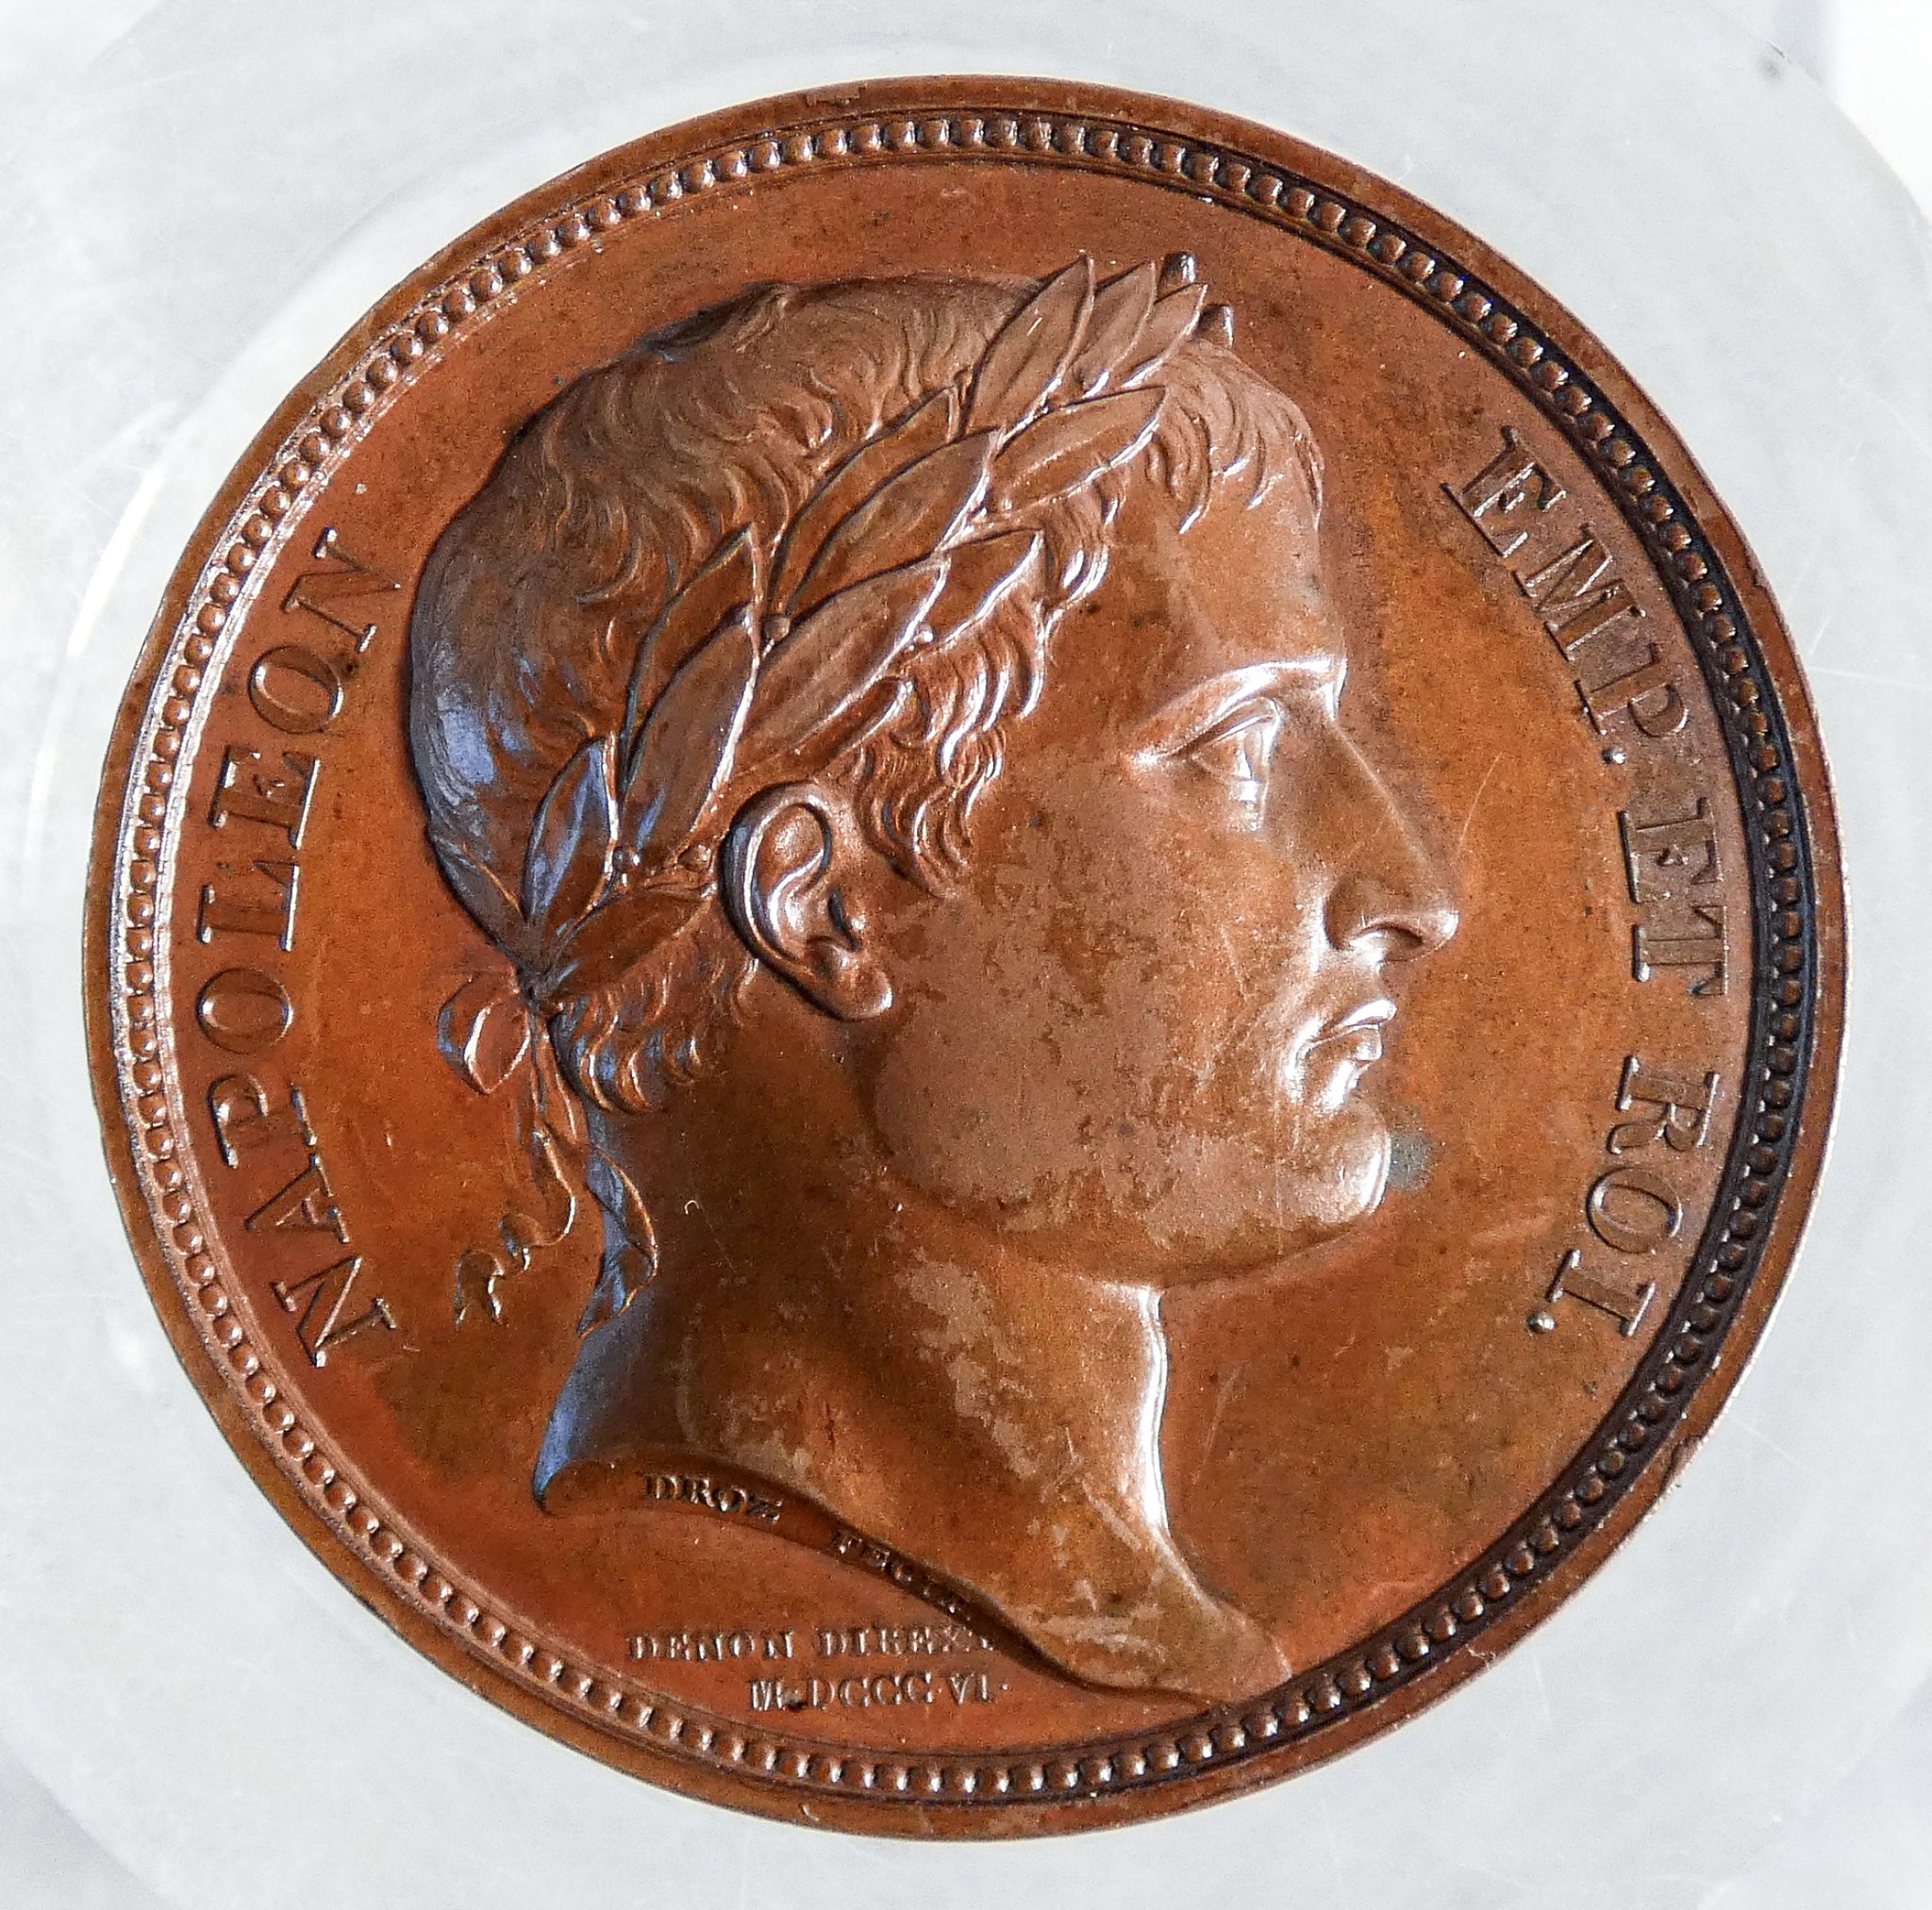 medaglia napoleone battaglia austerlitz 1806 droz denon jaley medaille france